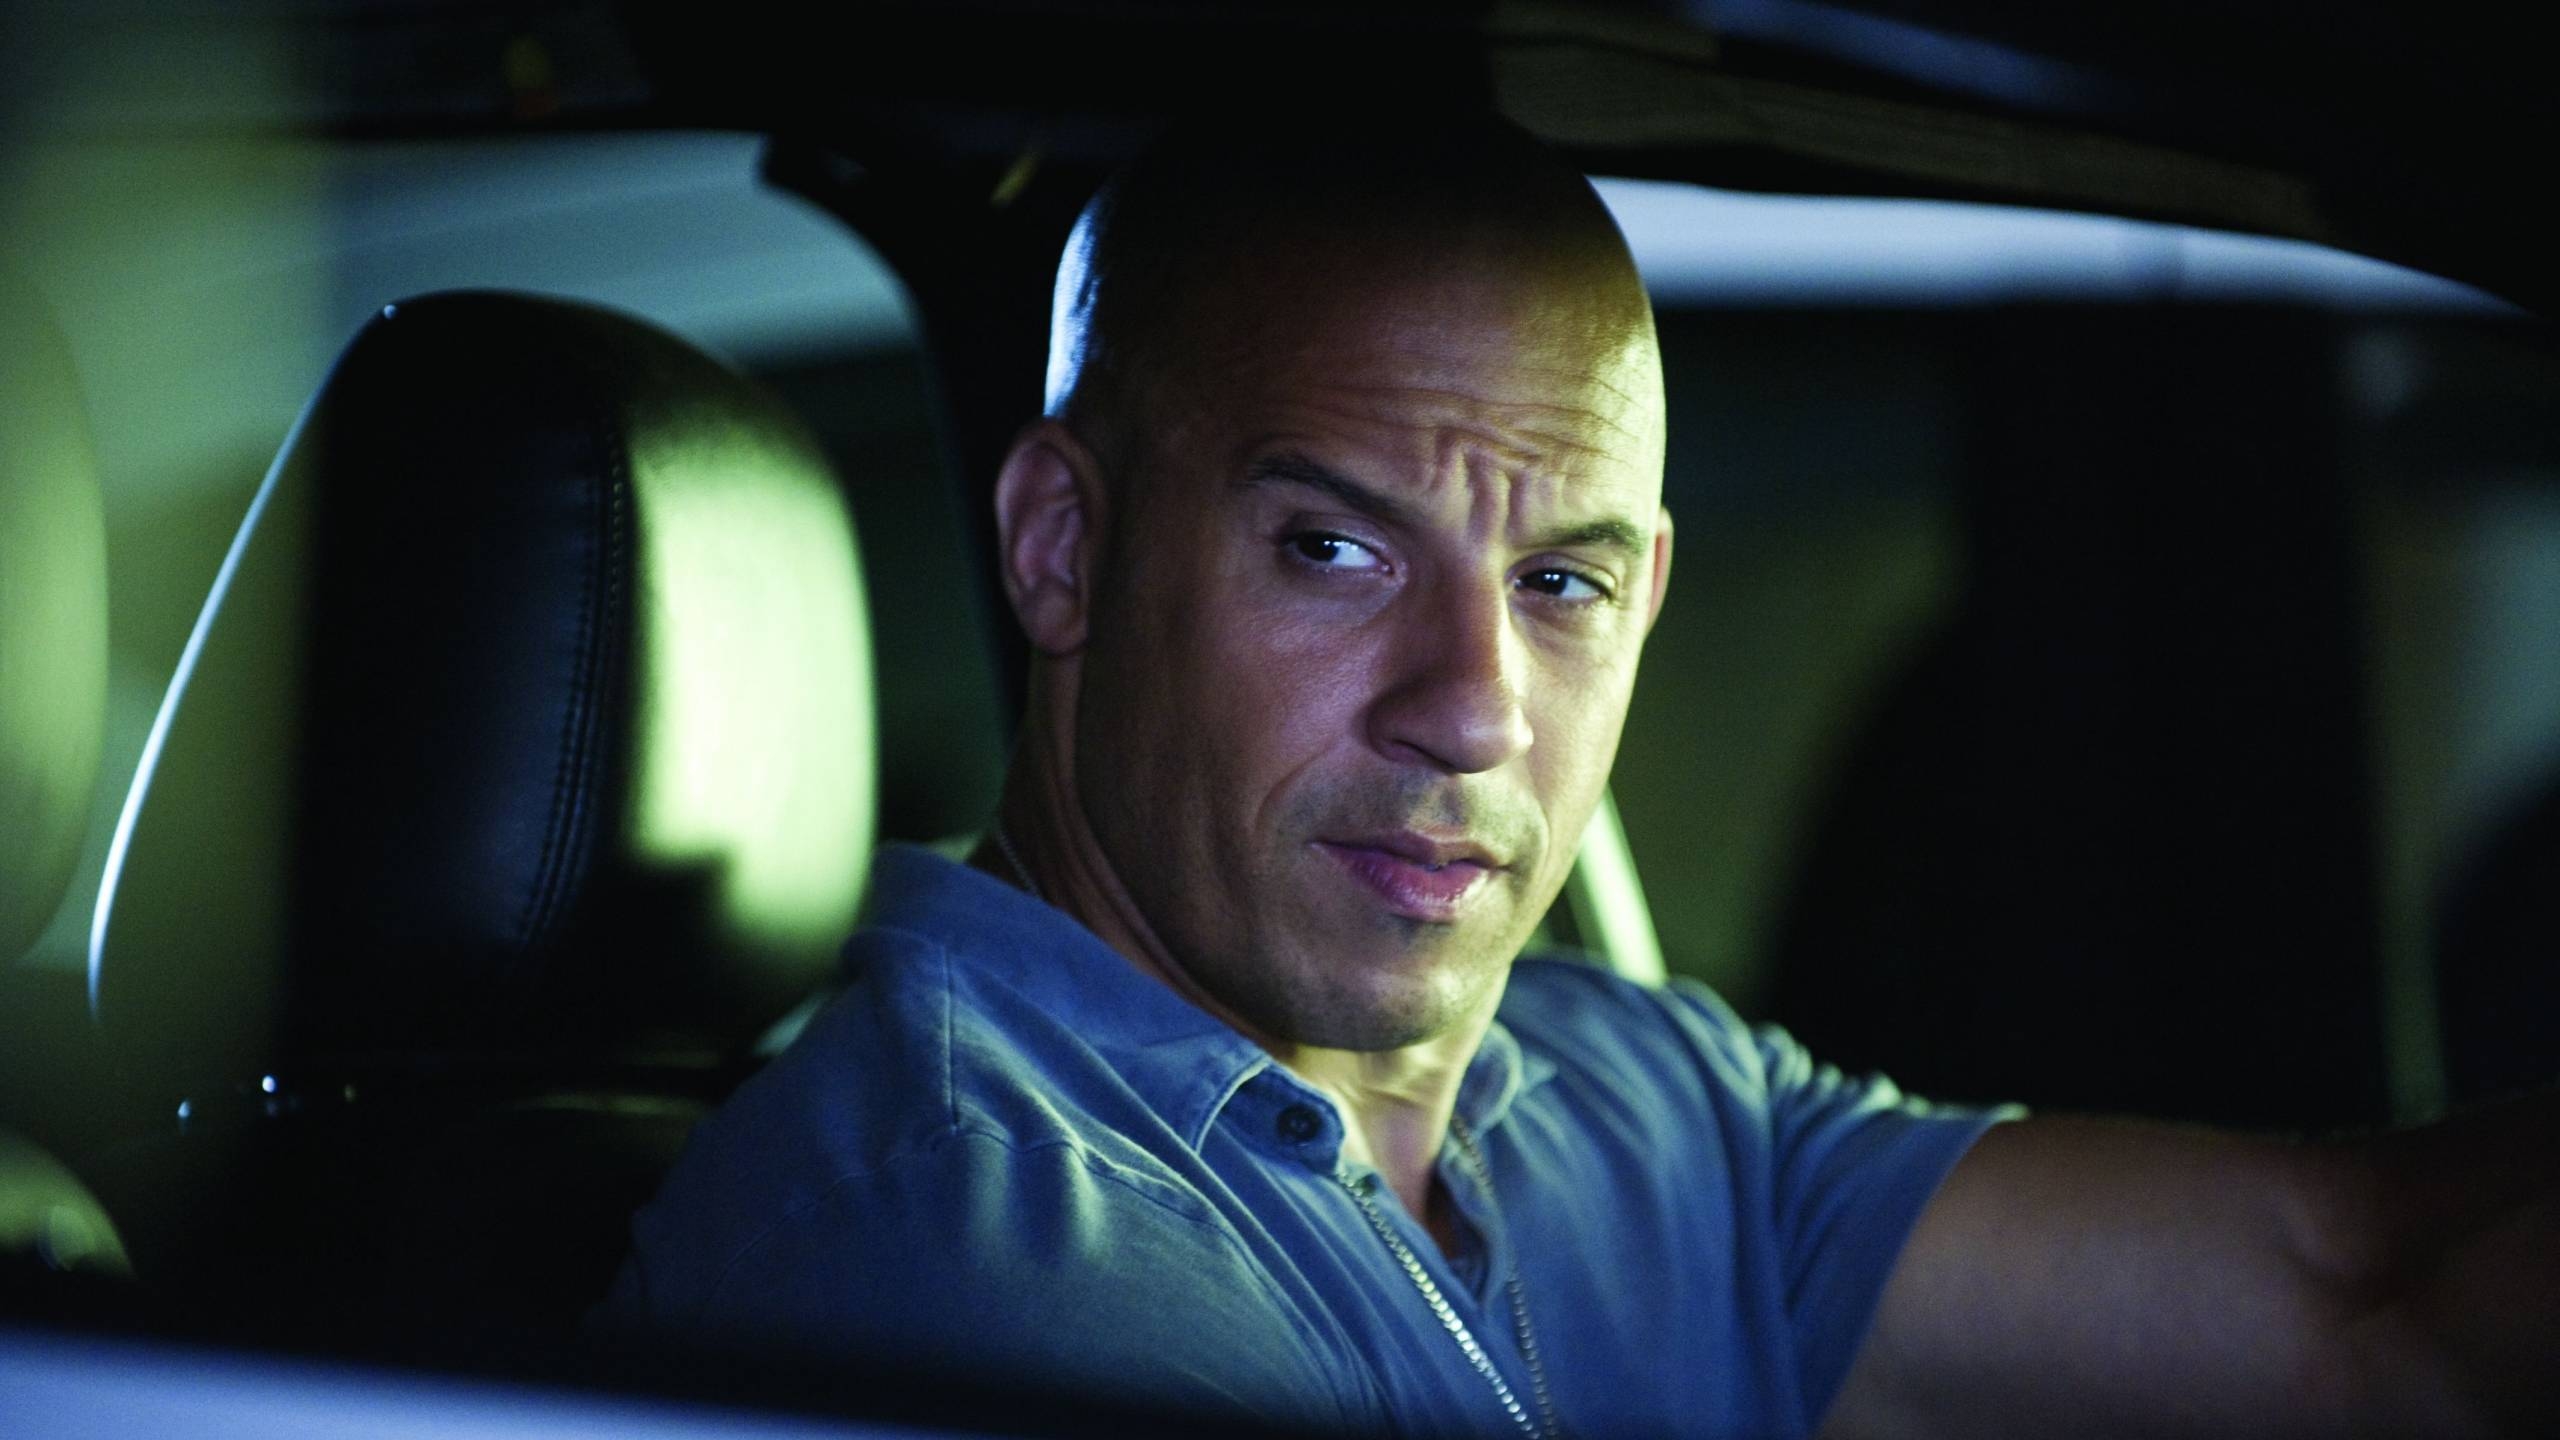 Vin Diesel in Car for 2560x1440 HDTV resolution